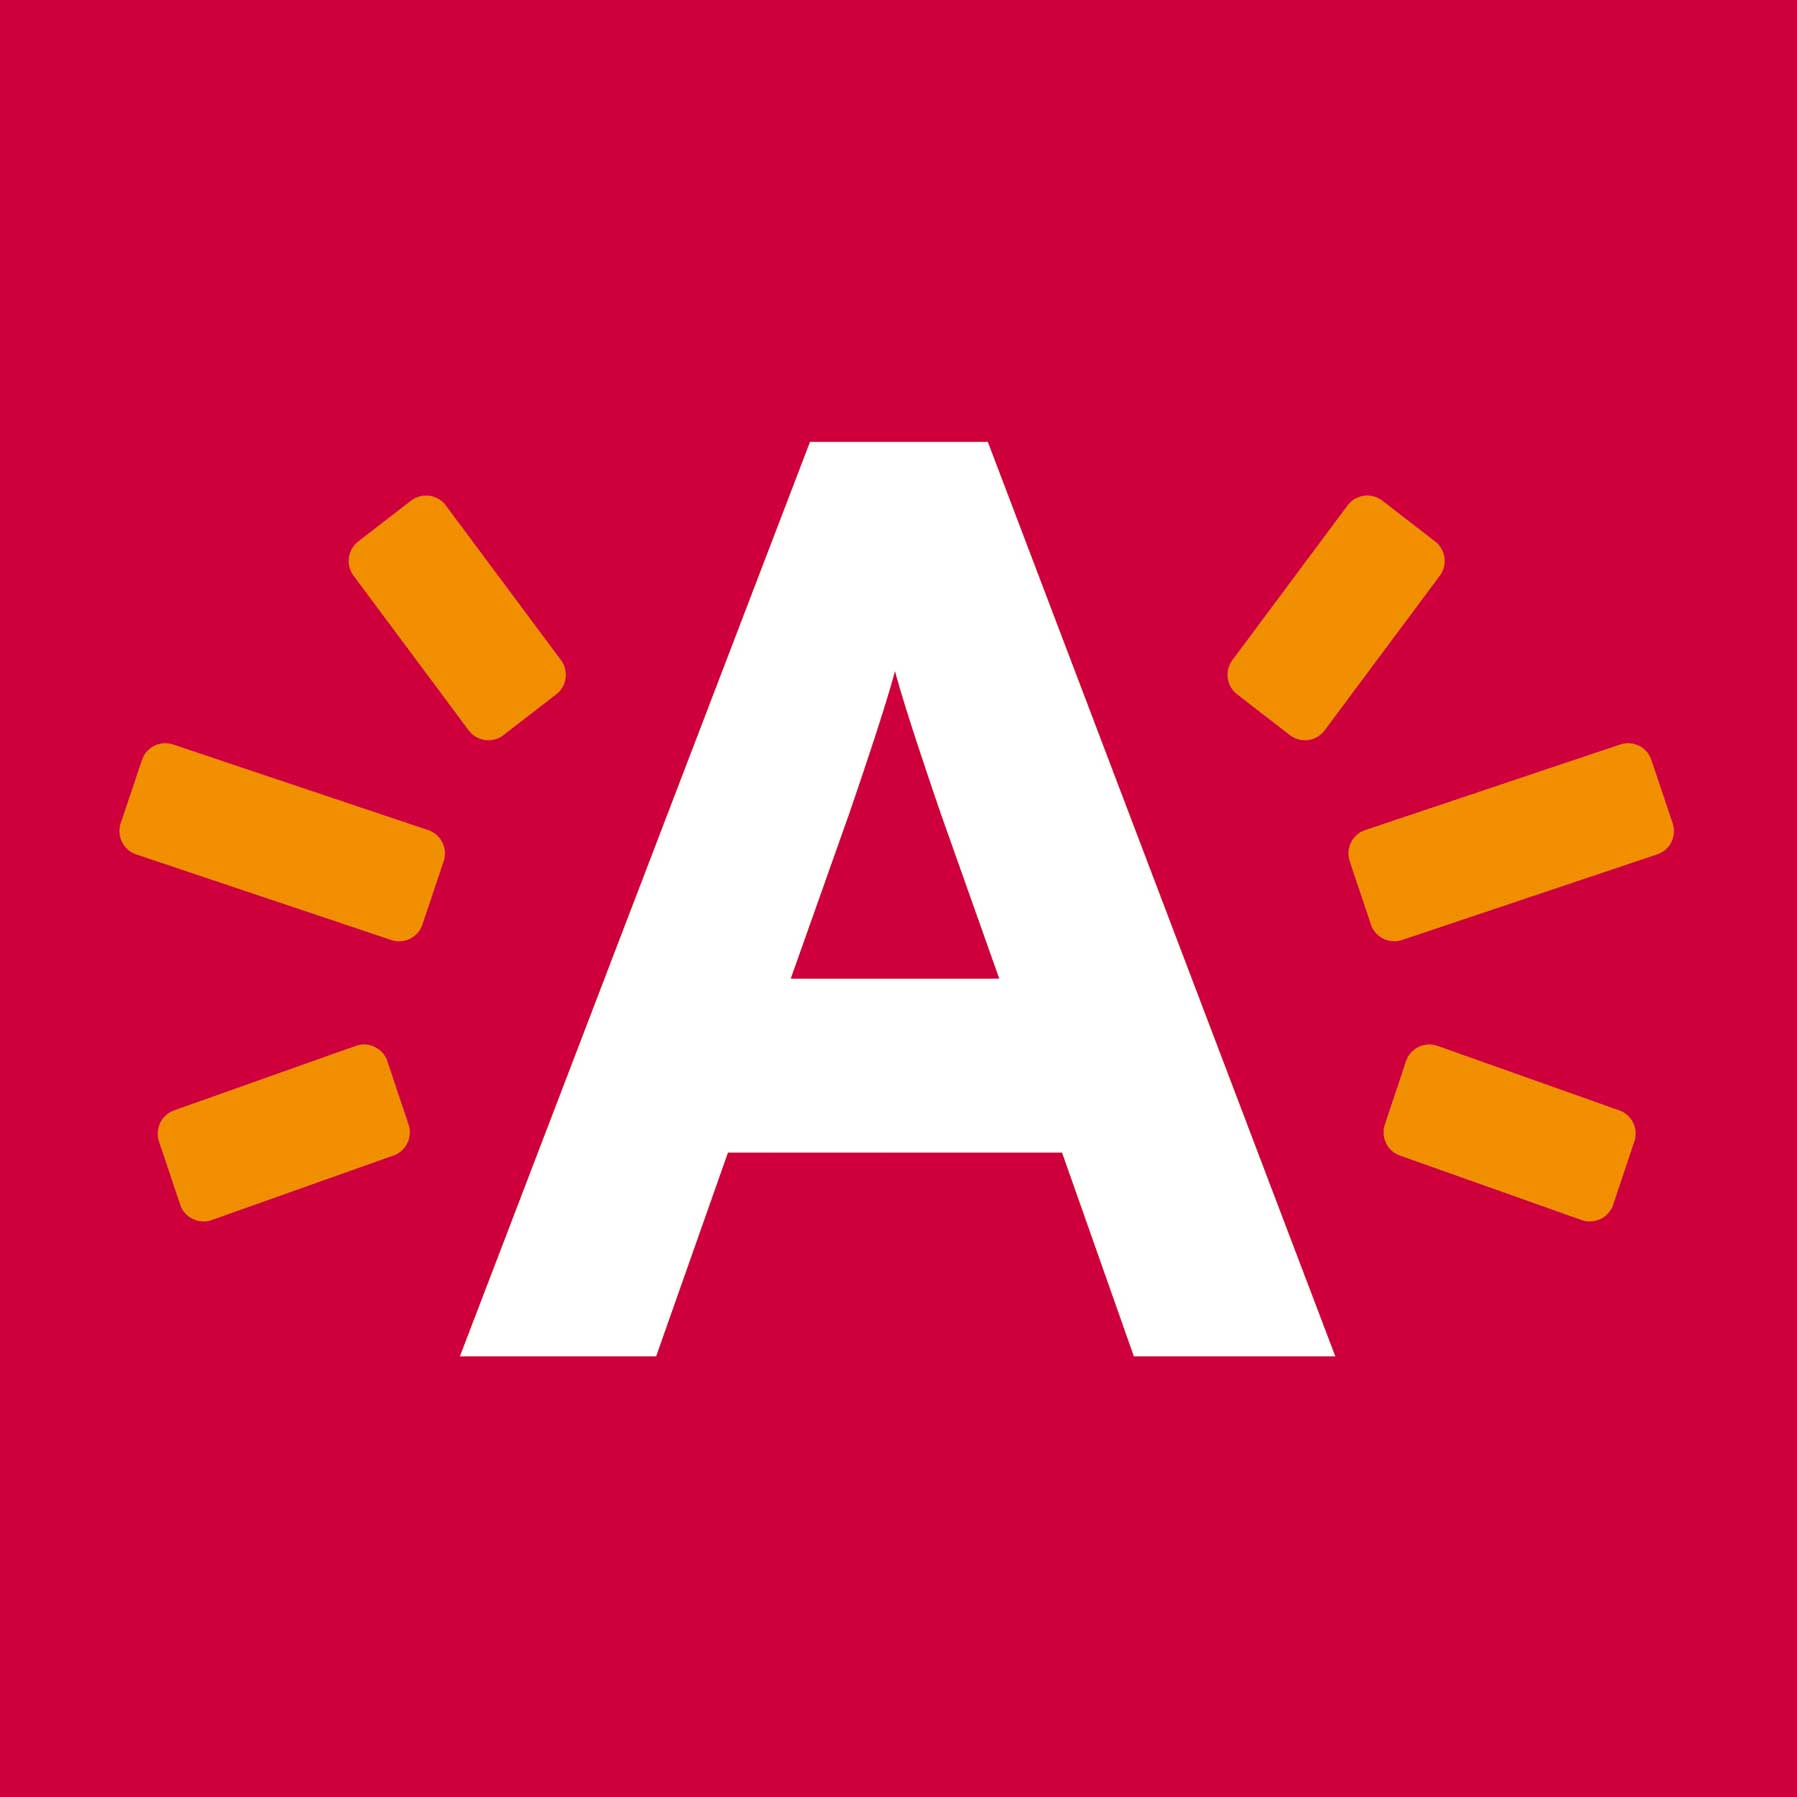 City of Antwerp logo